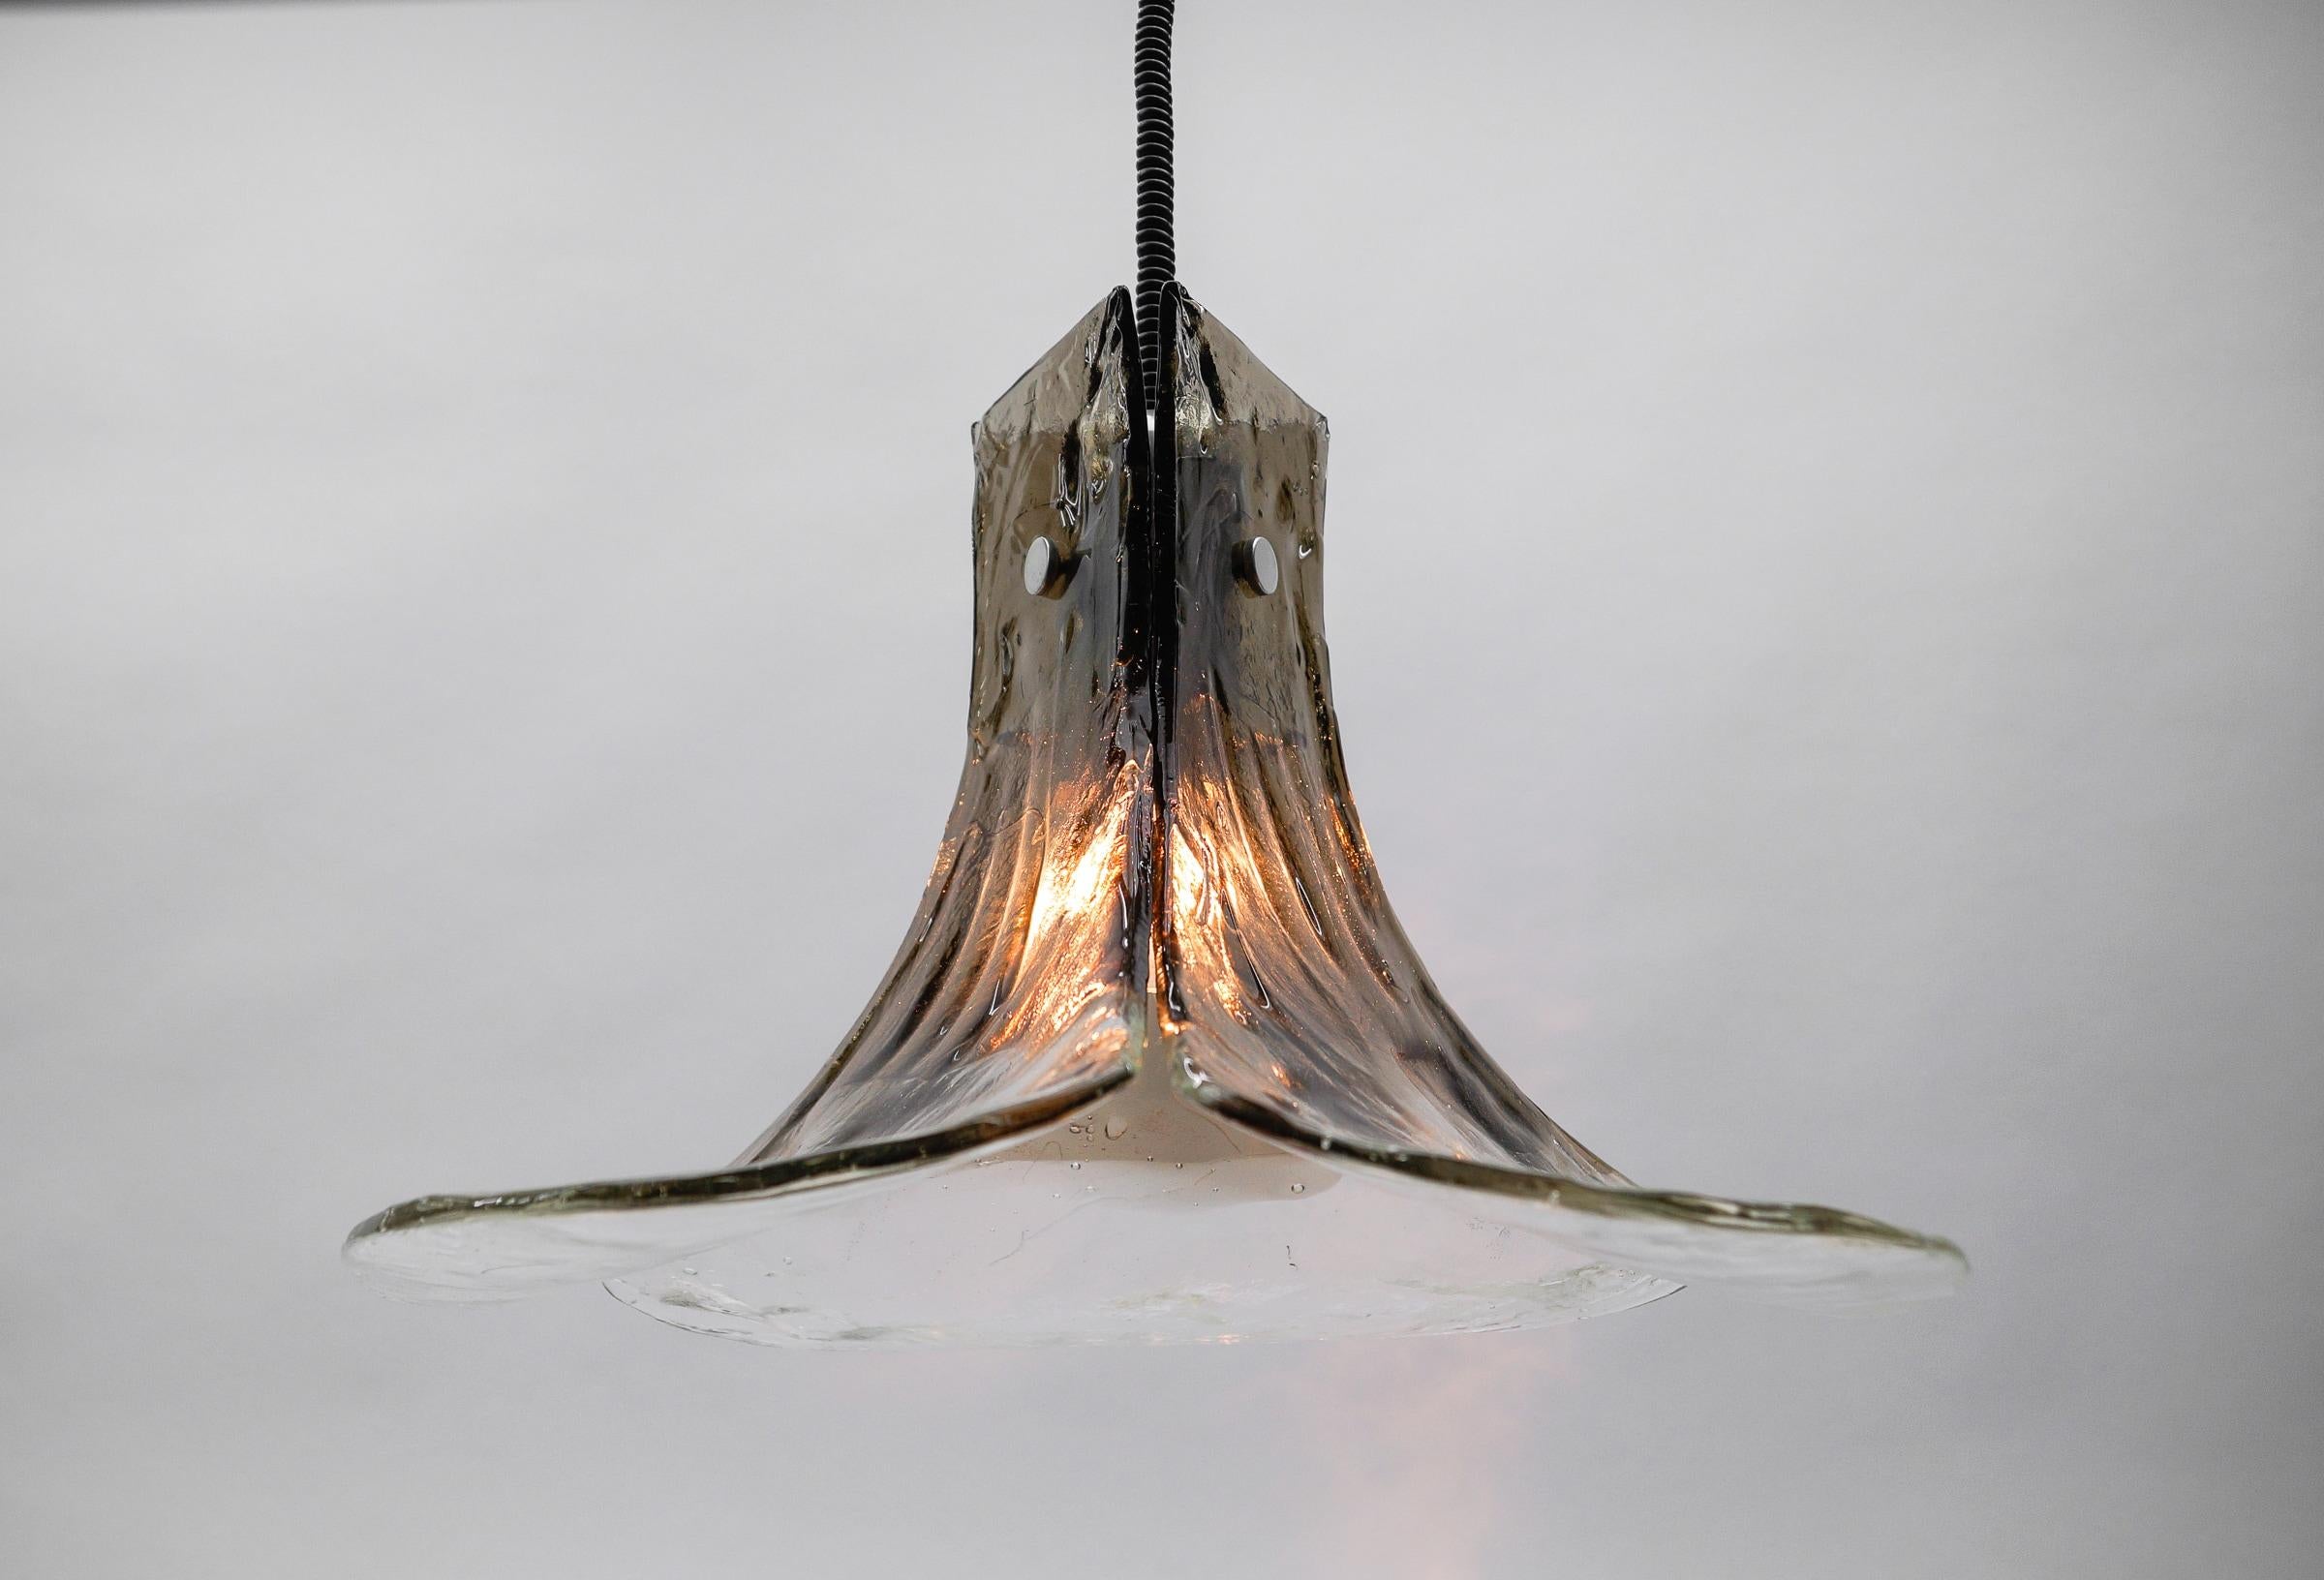 Space Age Carlo Nason Mazzega Pendant Lamp for J.T. Kalmar in Murano Glass, 1970s For Sale